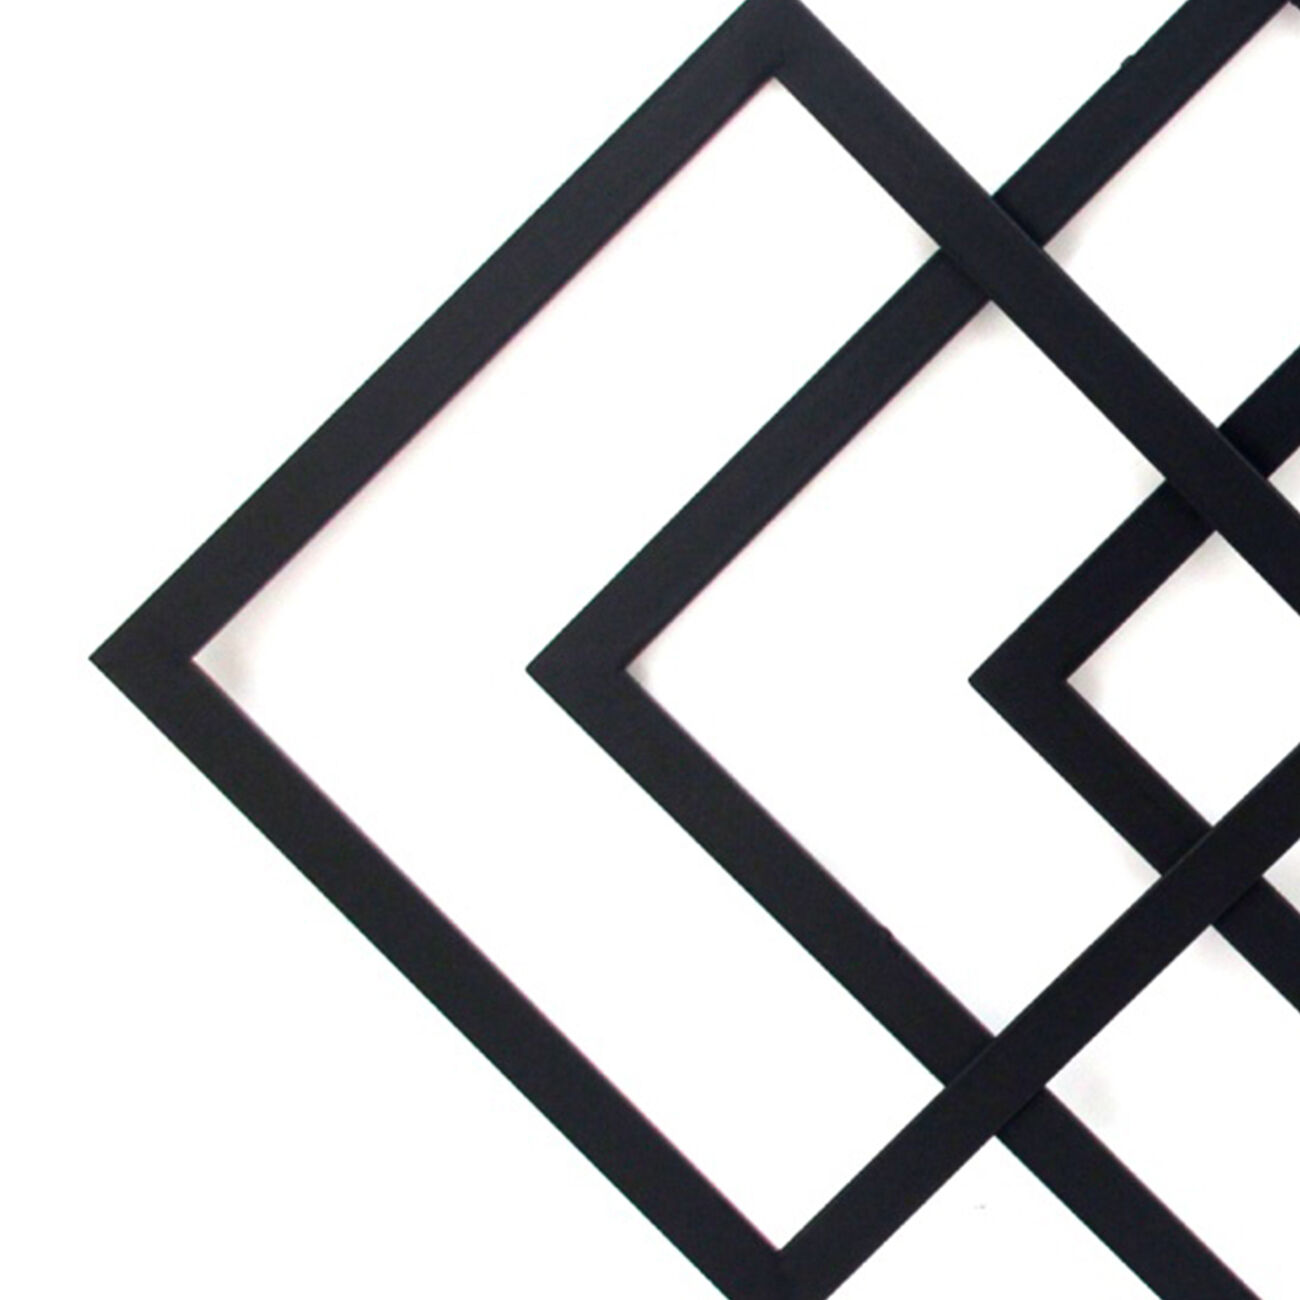 Contemporary Metal Wall Decor with Geometric Shape, Black